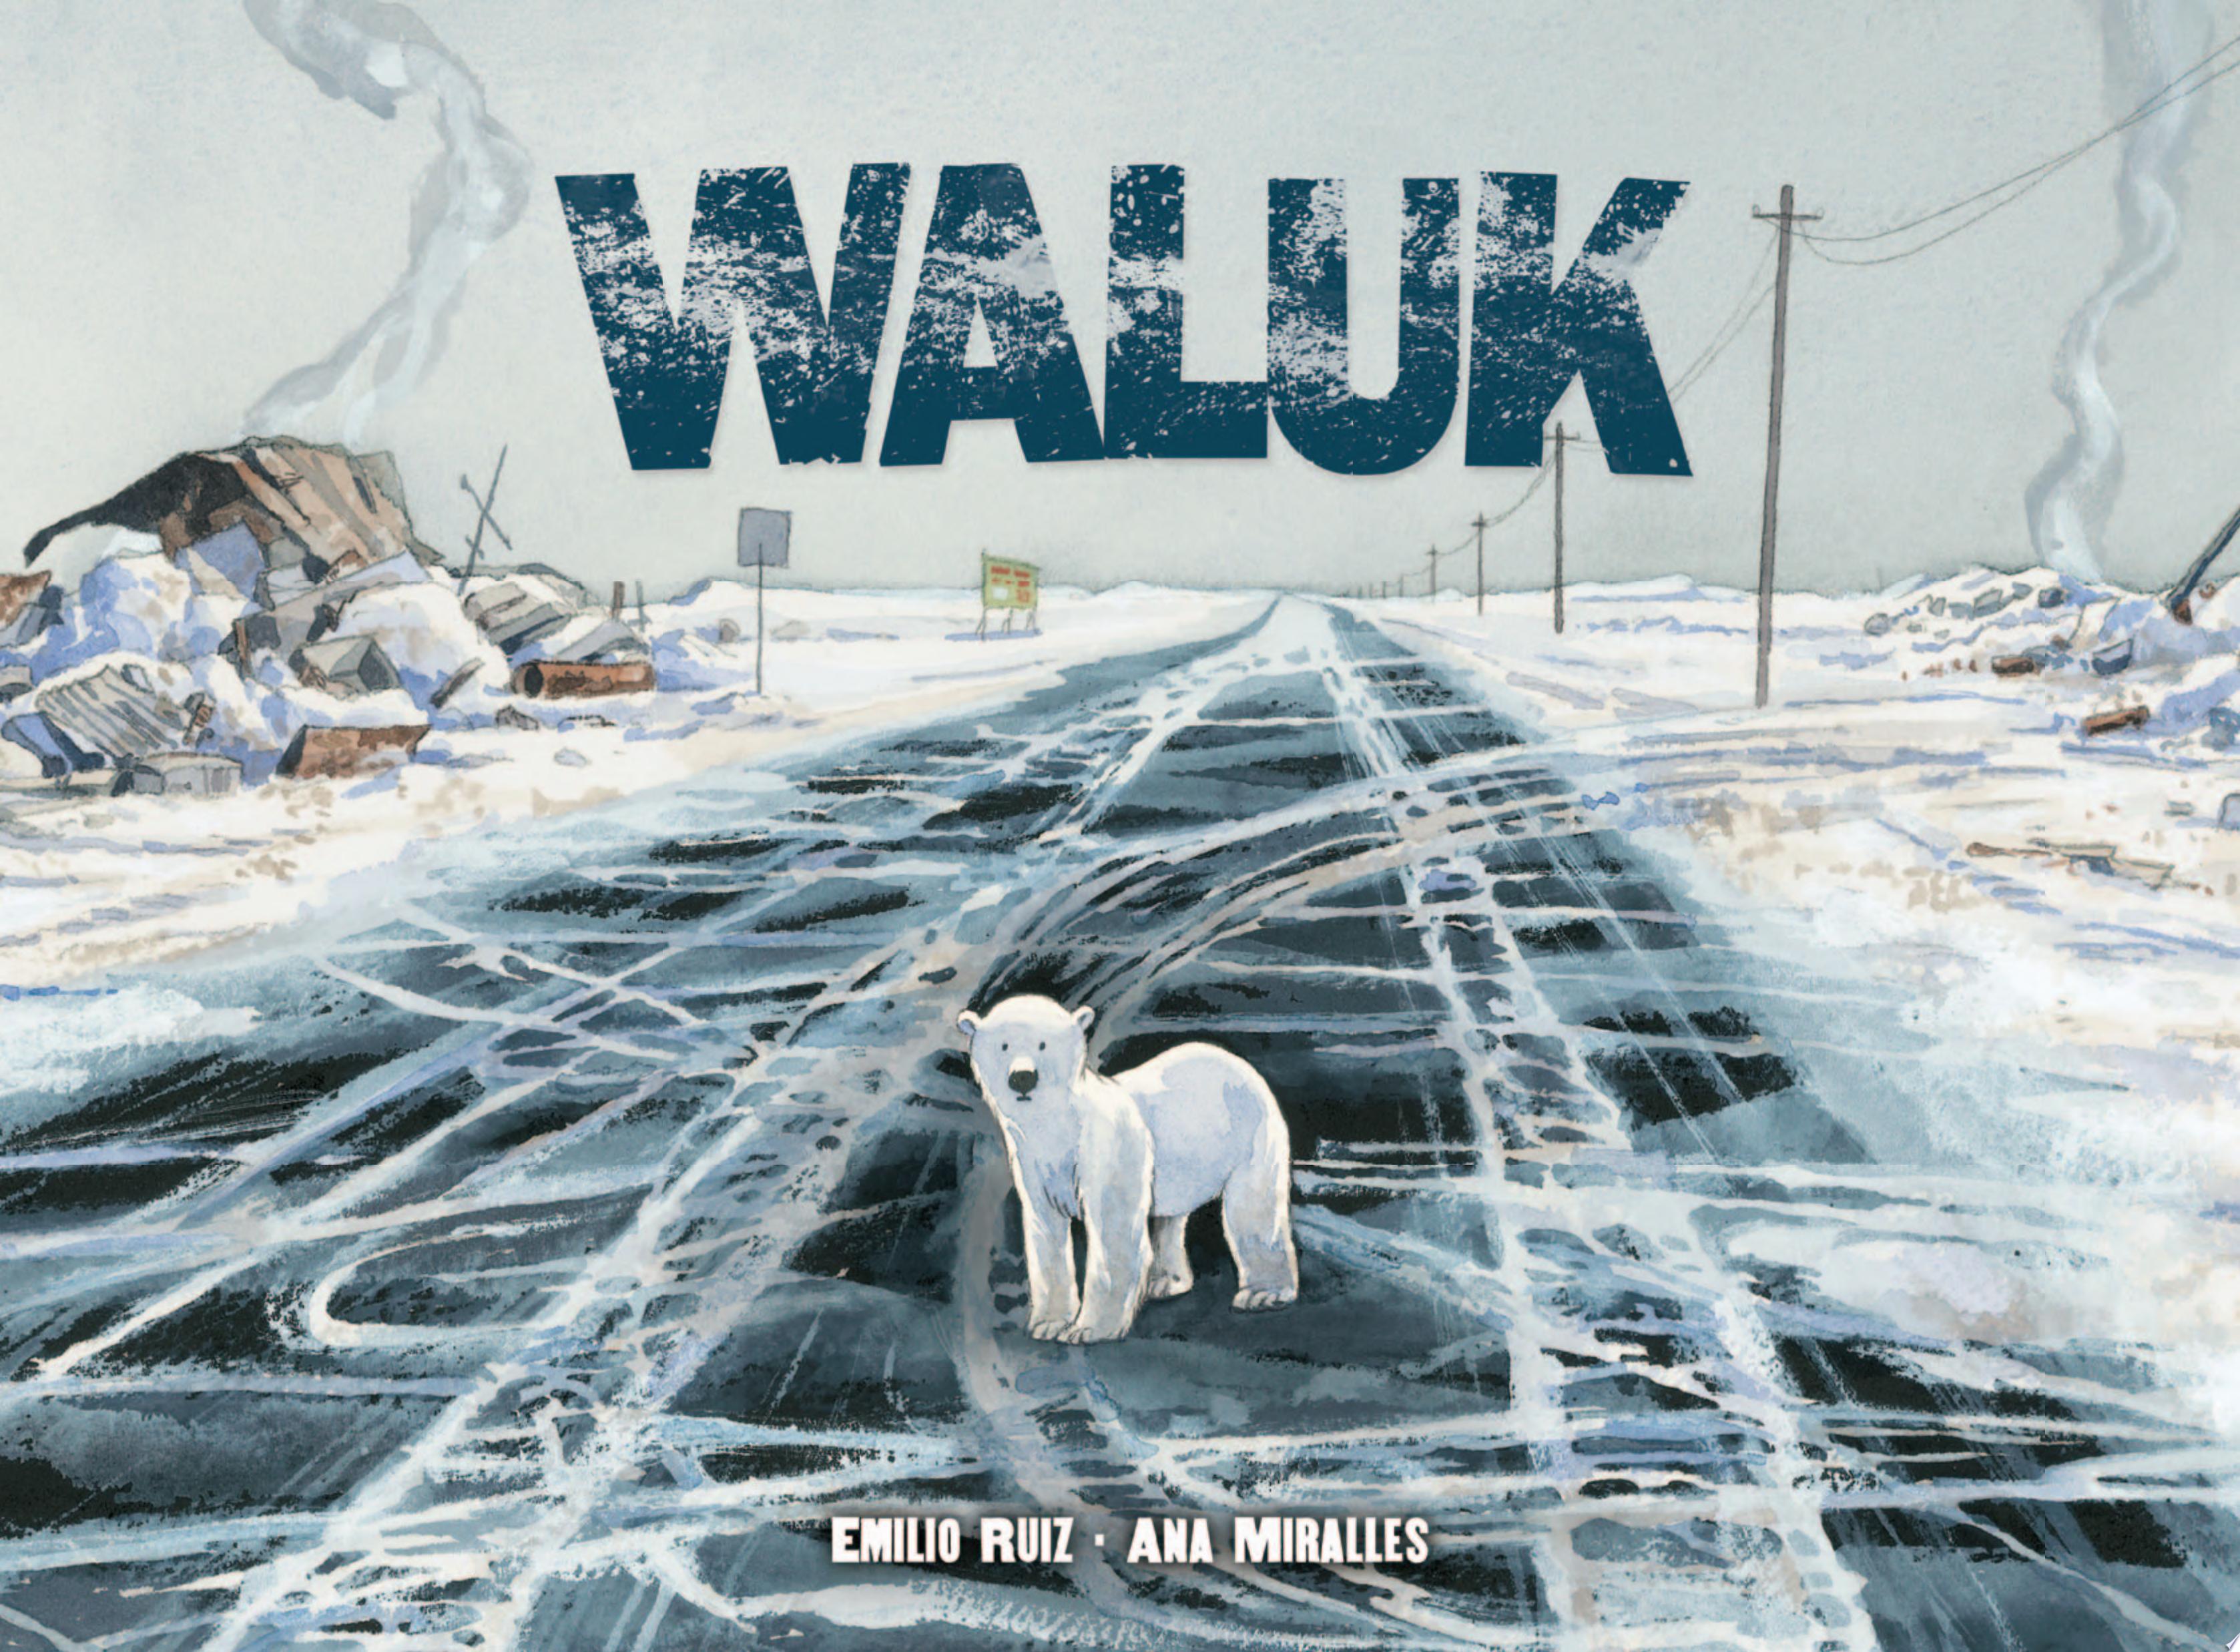 Image for "Waluk"